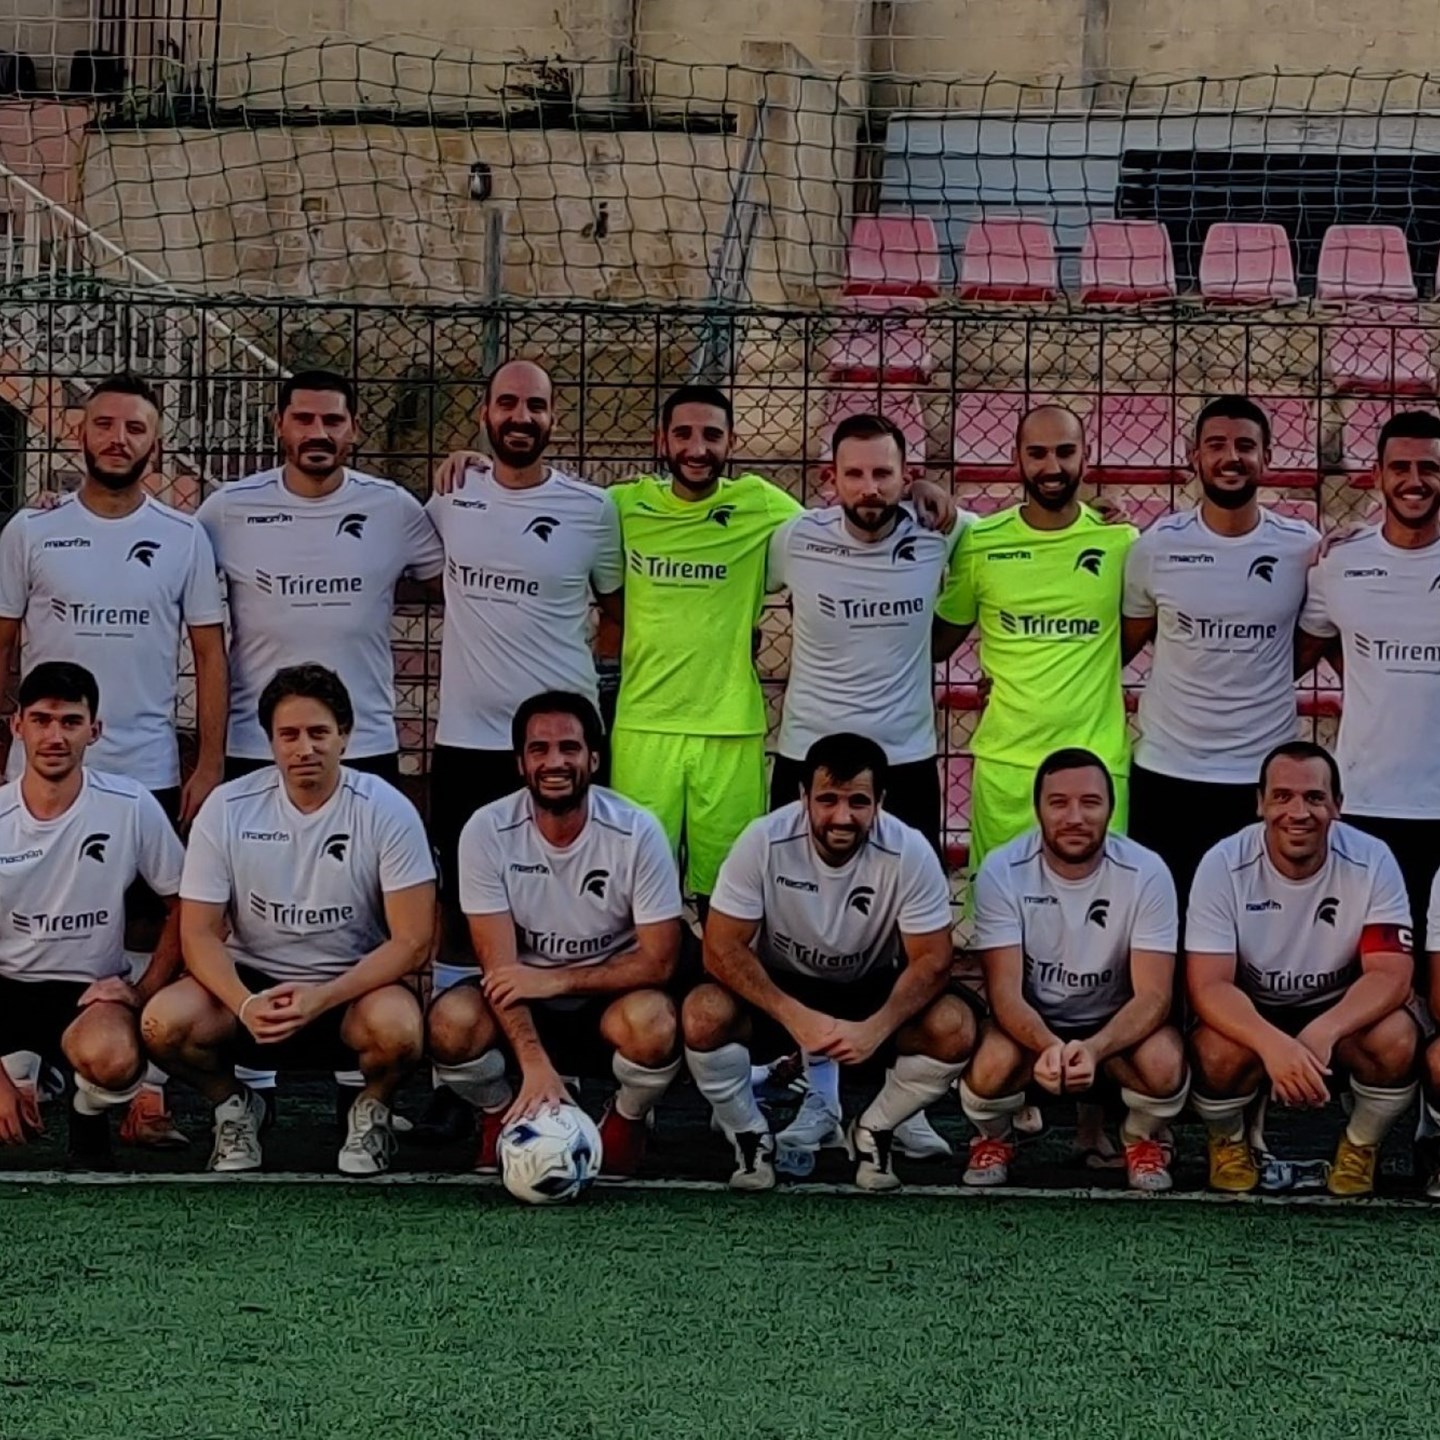 A group of men in football kit in Malta